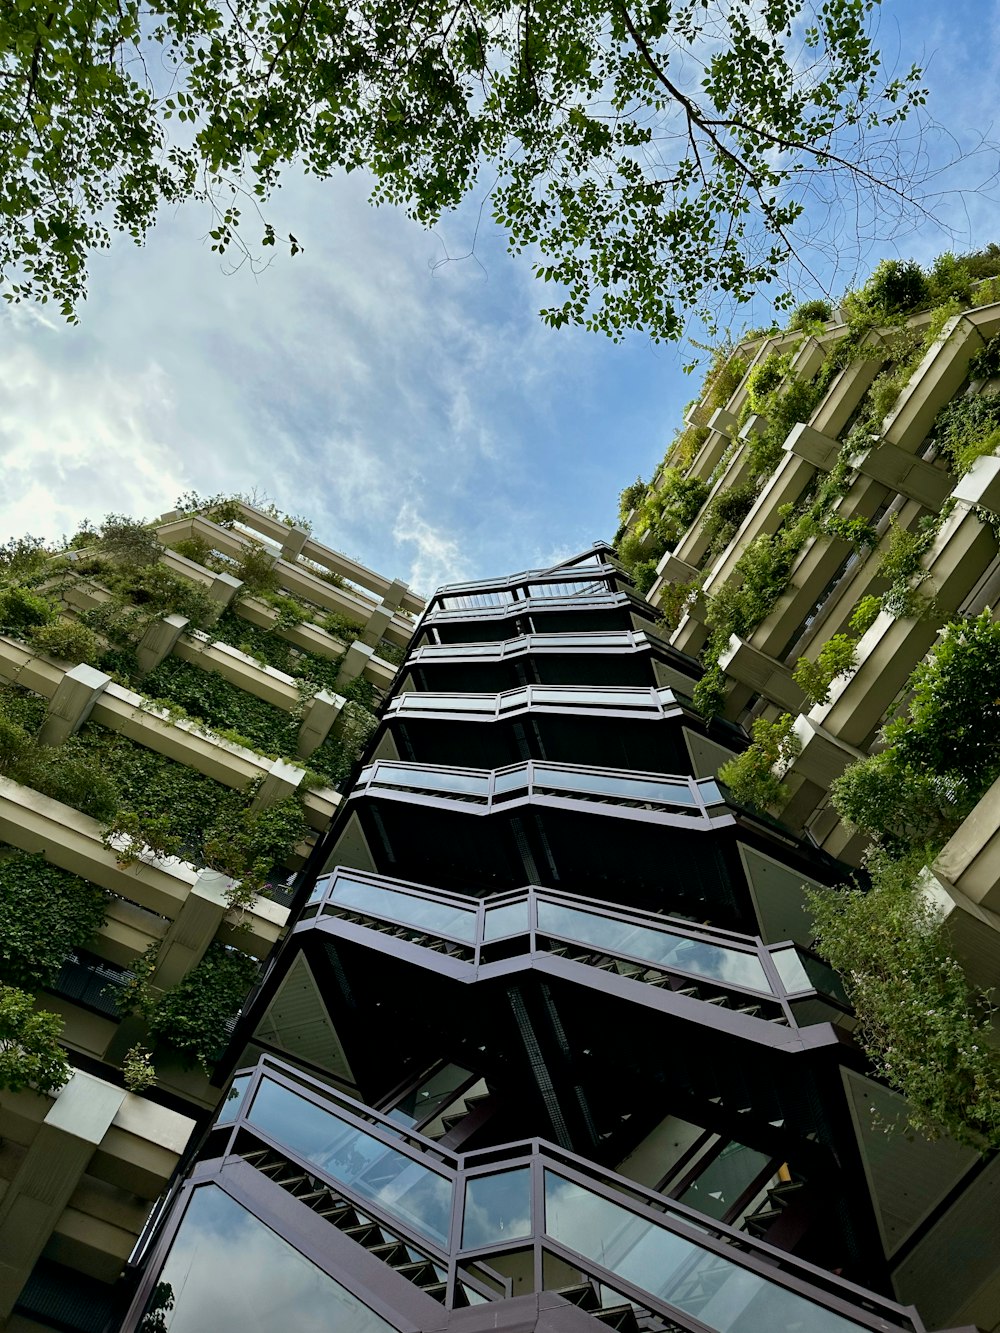 Un immeuble de grande hauteur recouvert de plantes